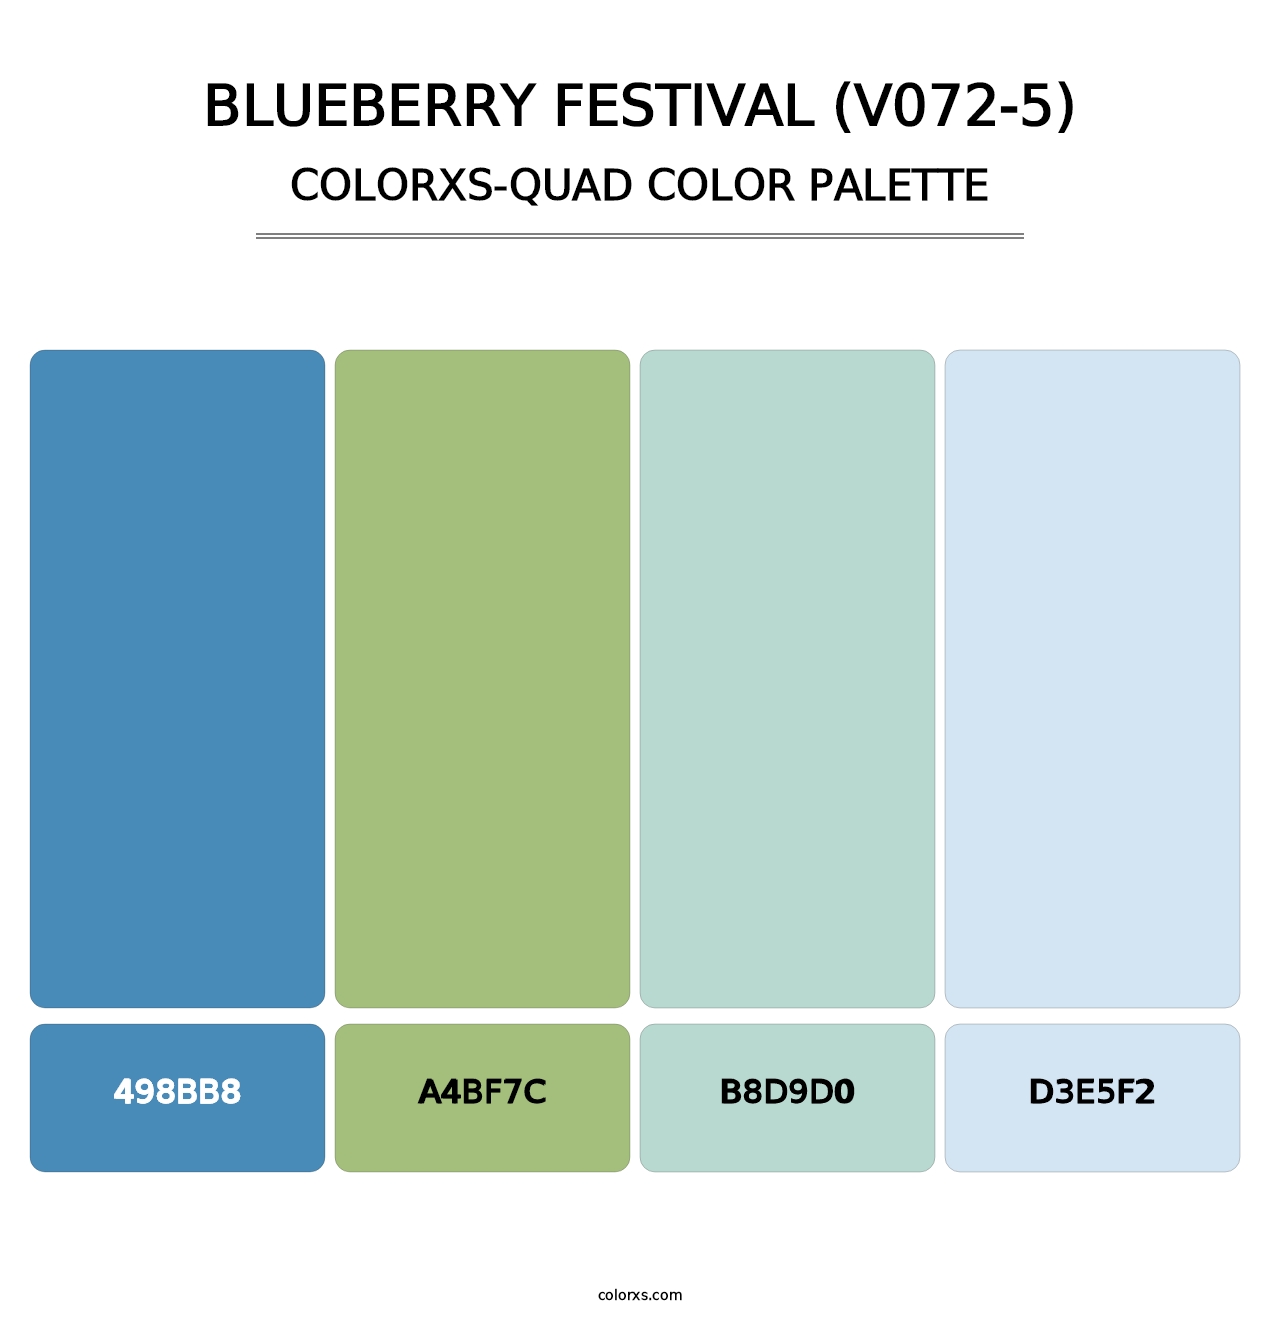 Blueberry Festival (V072-5) - Colorxs Quad Palette